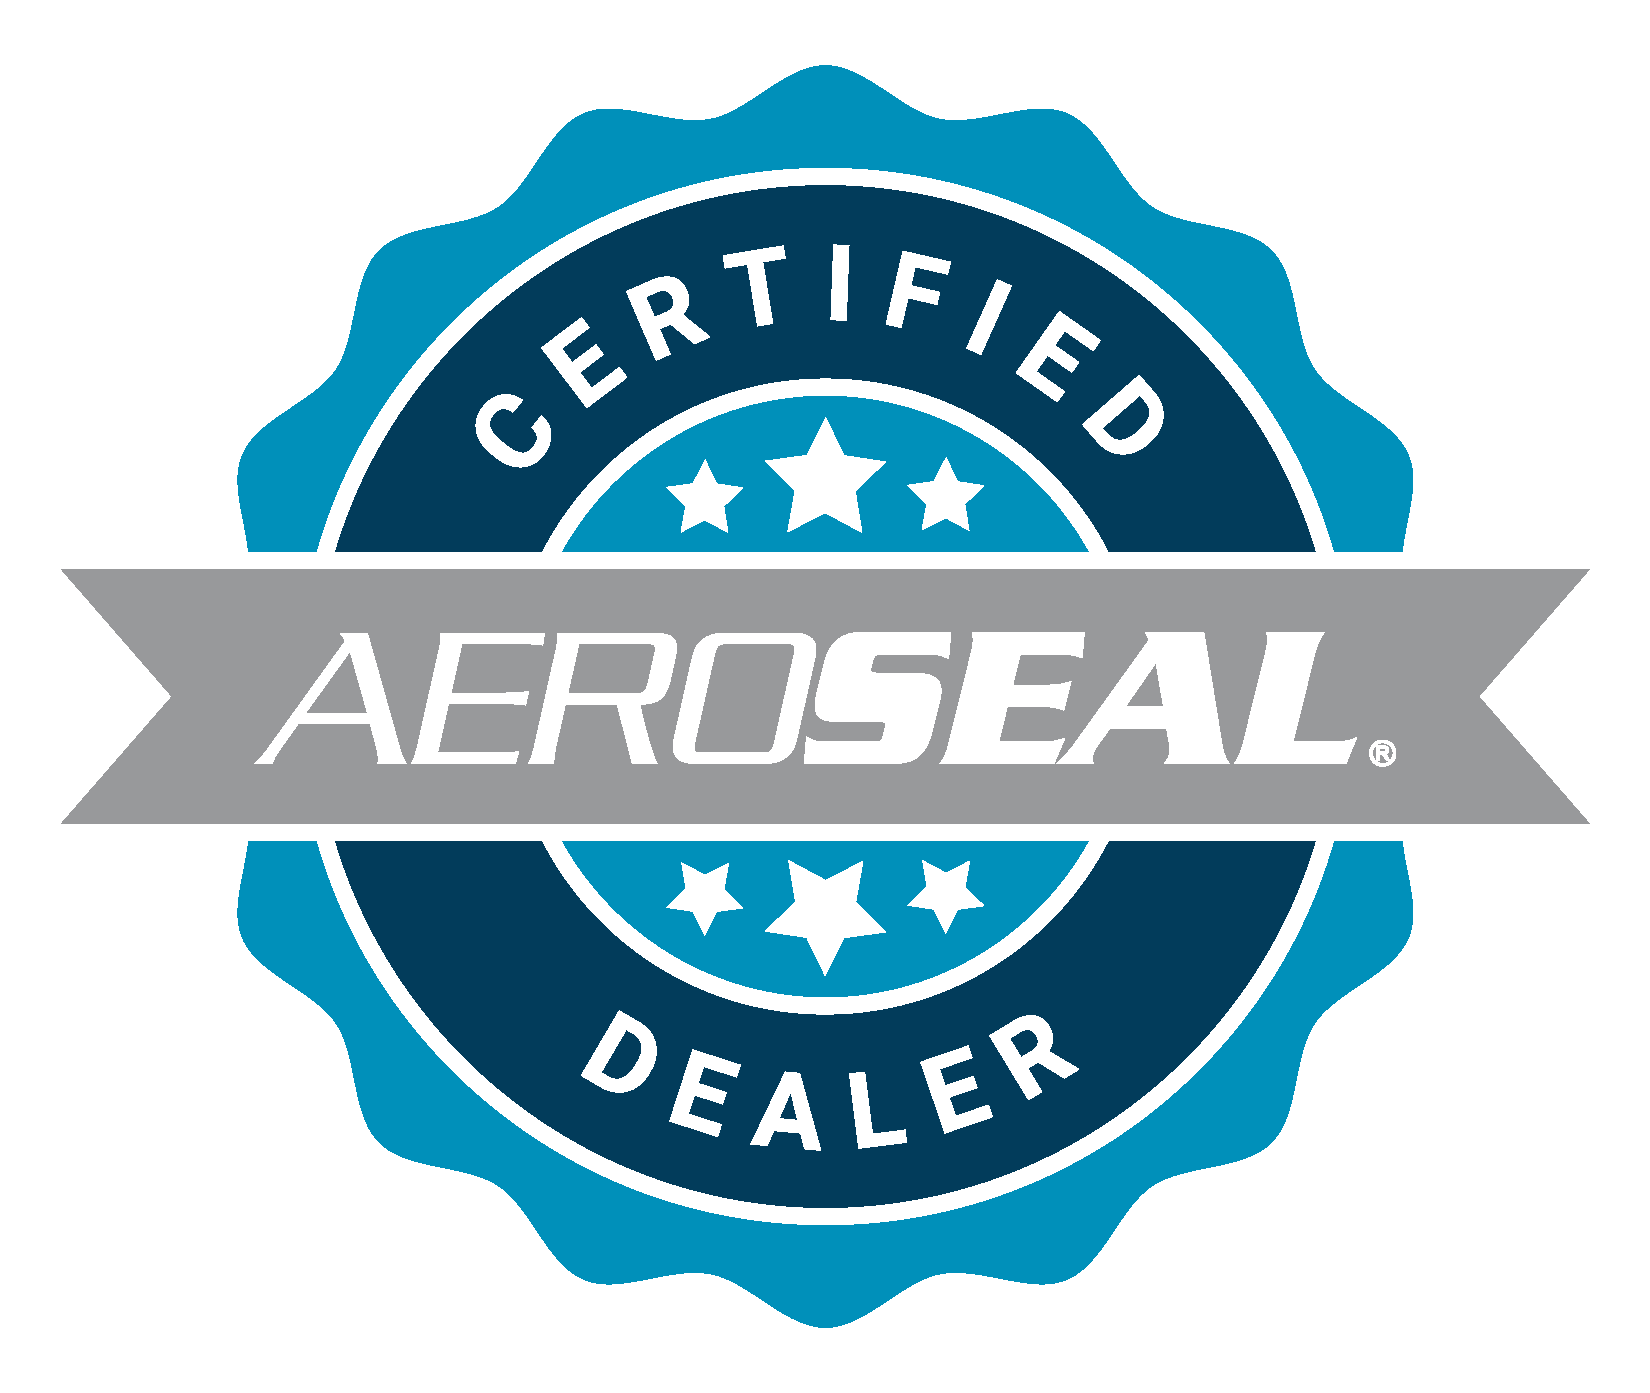 Air Duct Sealing - Aeroseal Certified Dealer